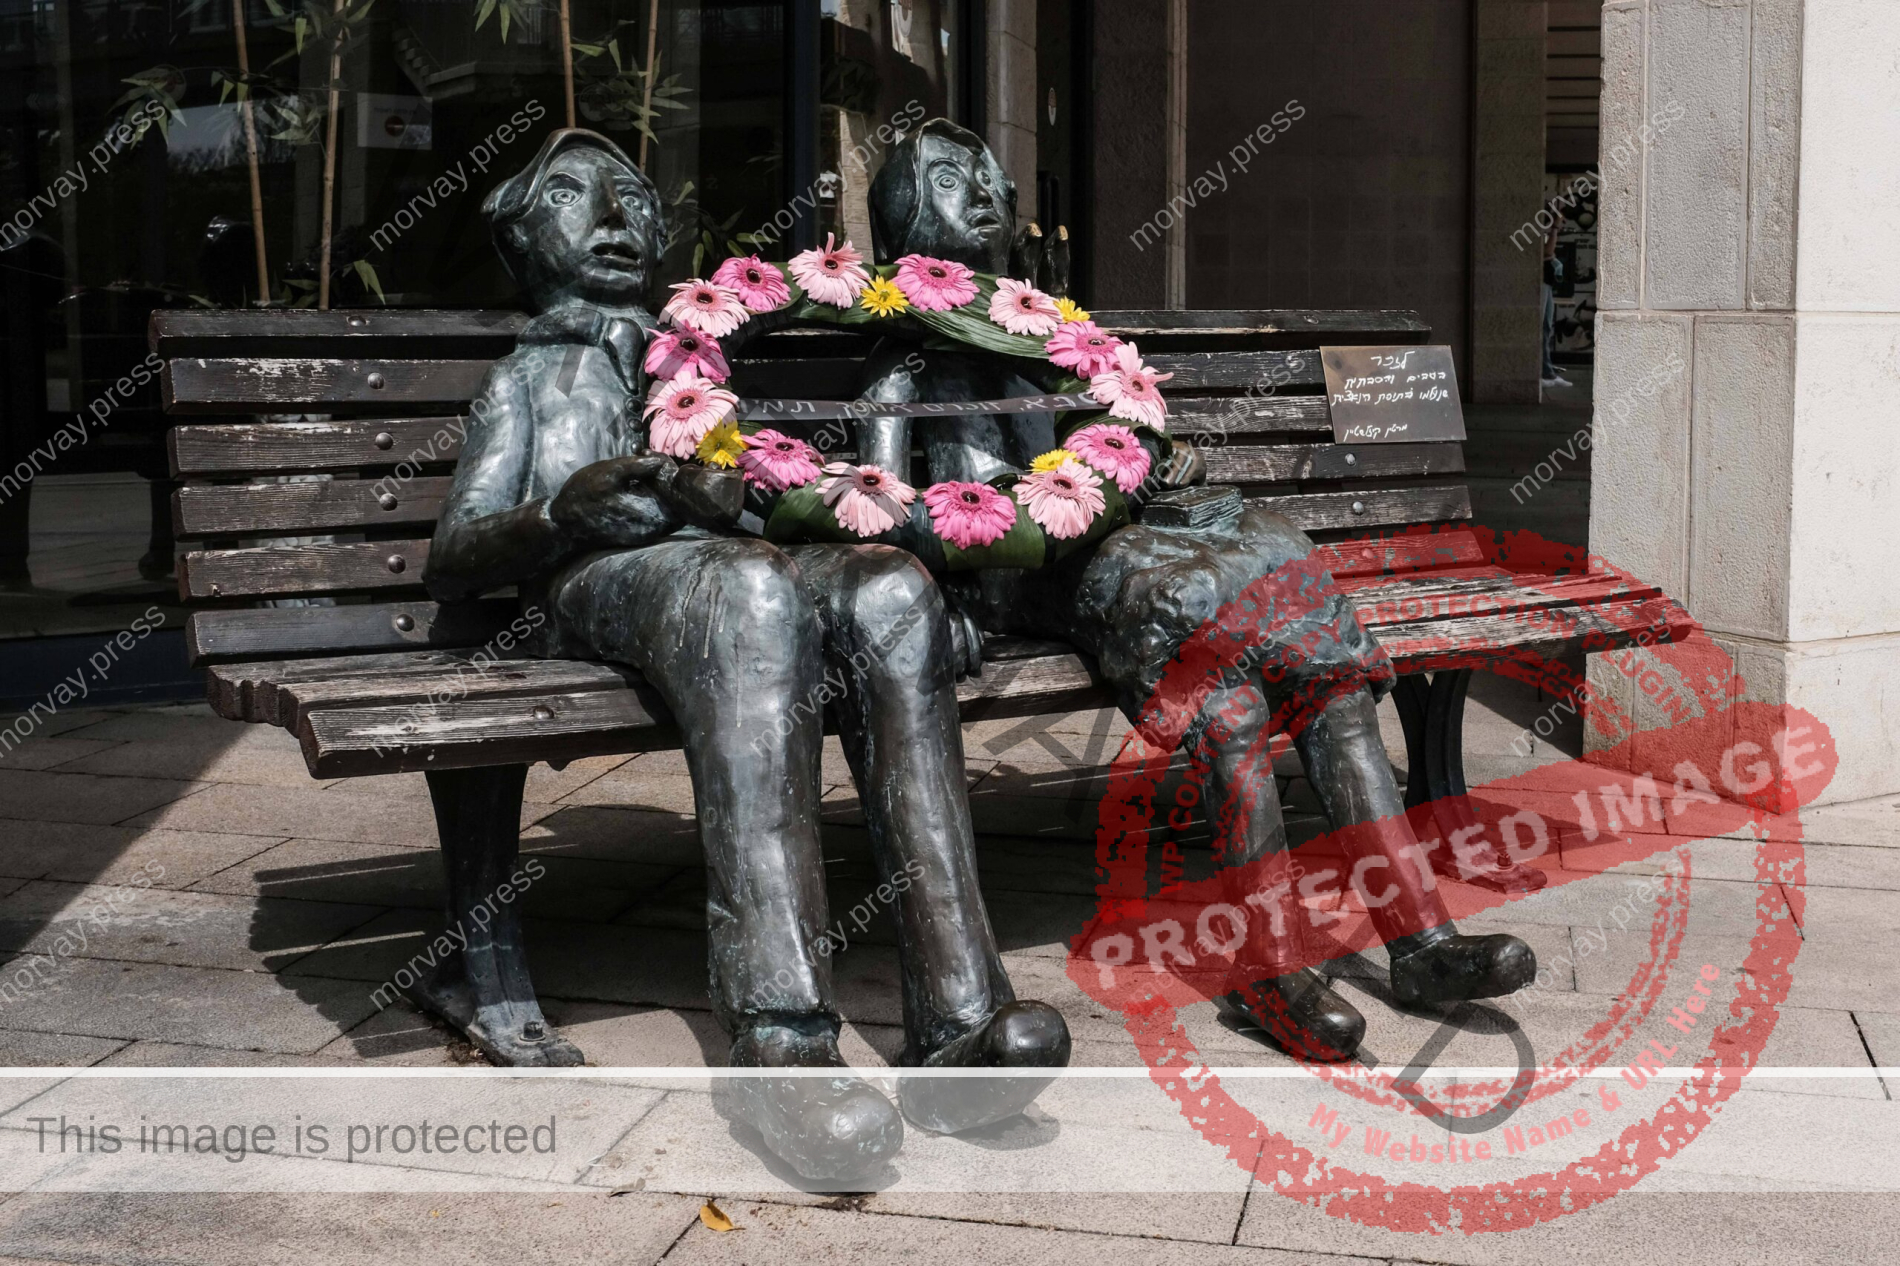 April 21, 2020, Jerusalem, Israel: A flower wreath lies on a statue created by Dr. Martin Kizelstein, Holocaust survivo